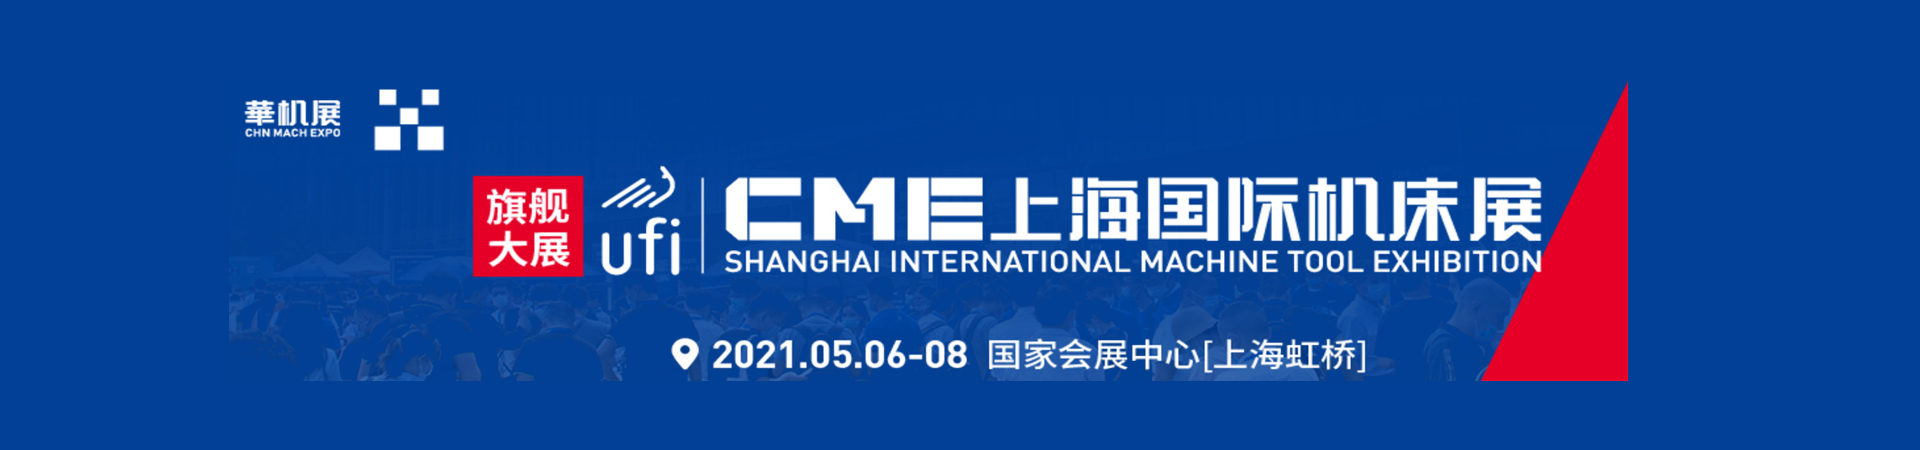 CME上海国际机床展